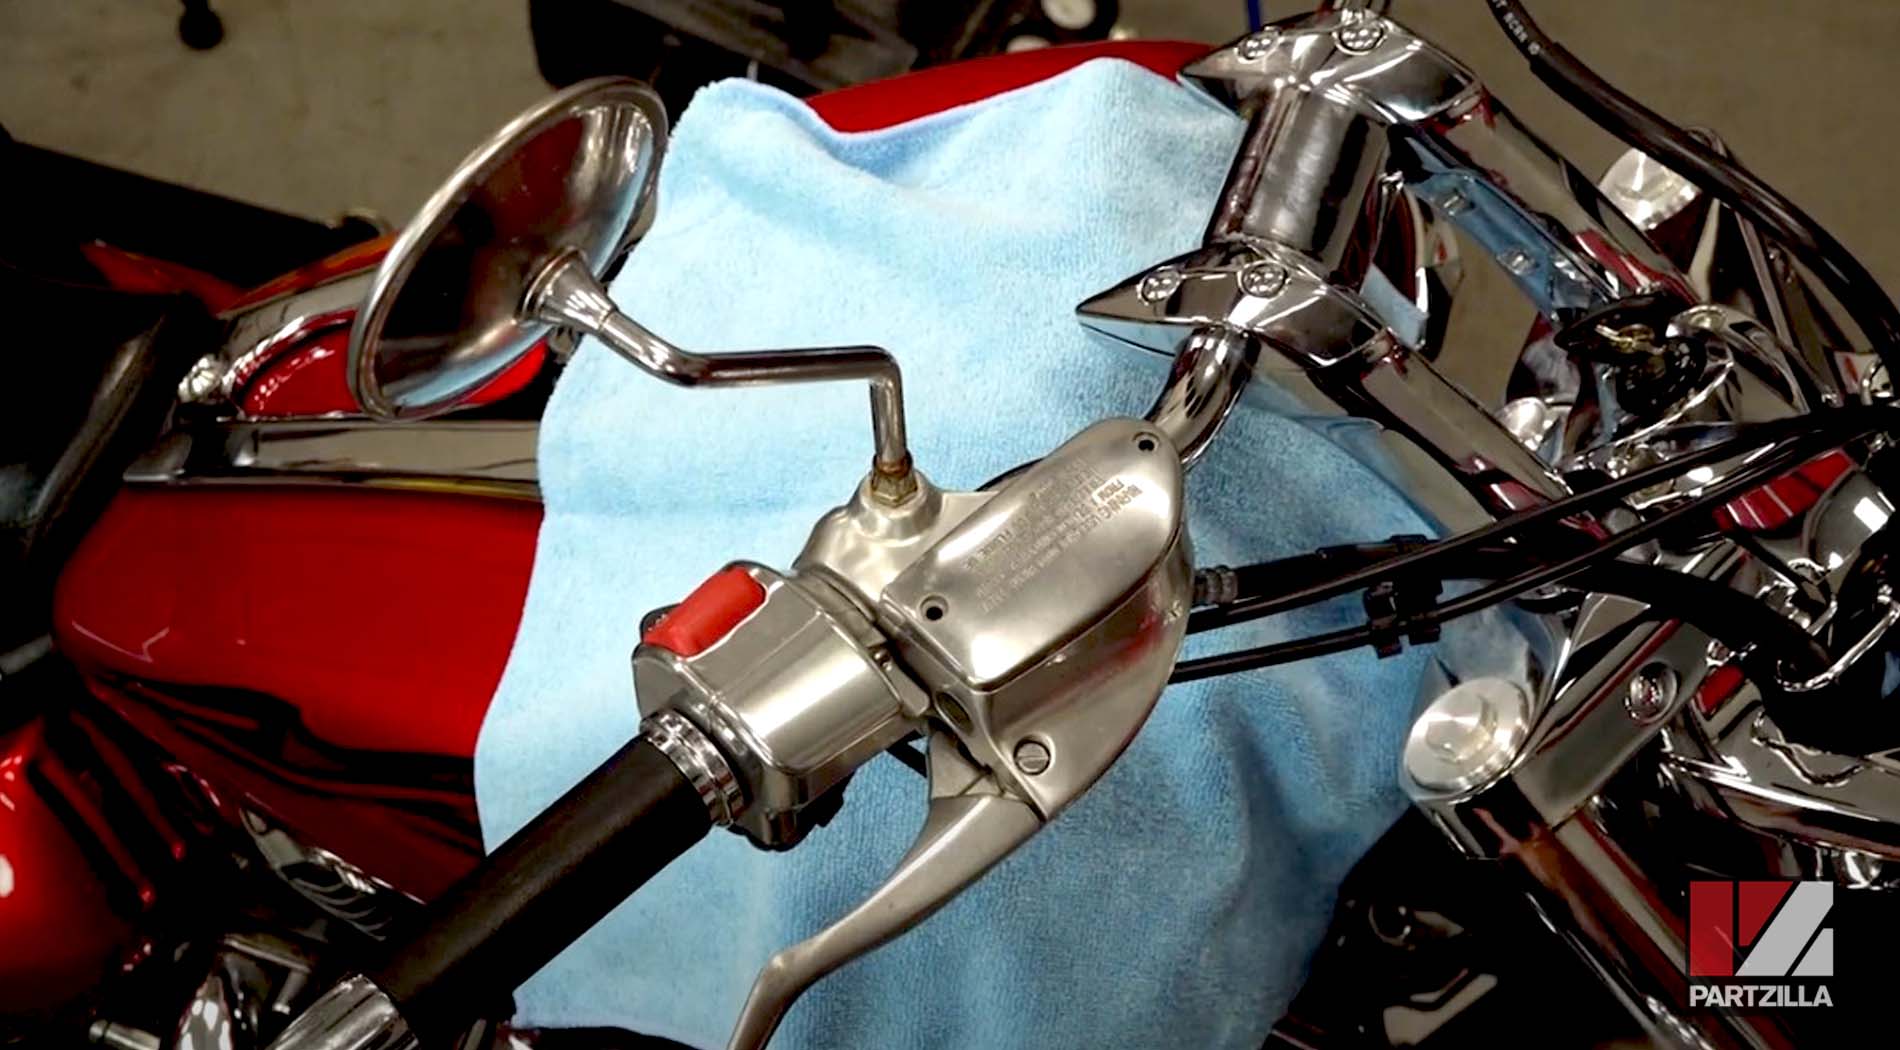 2008 Yamaha Raider motorcycle brake fluid bleed